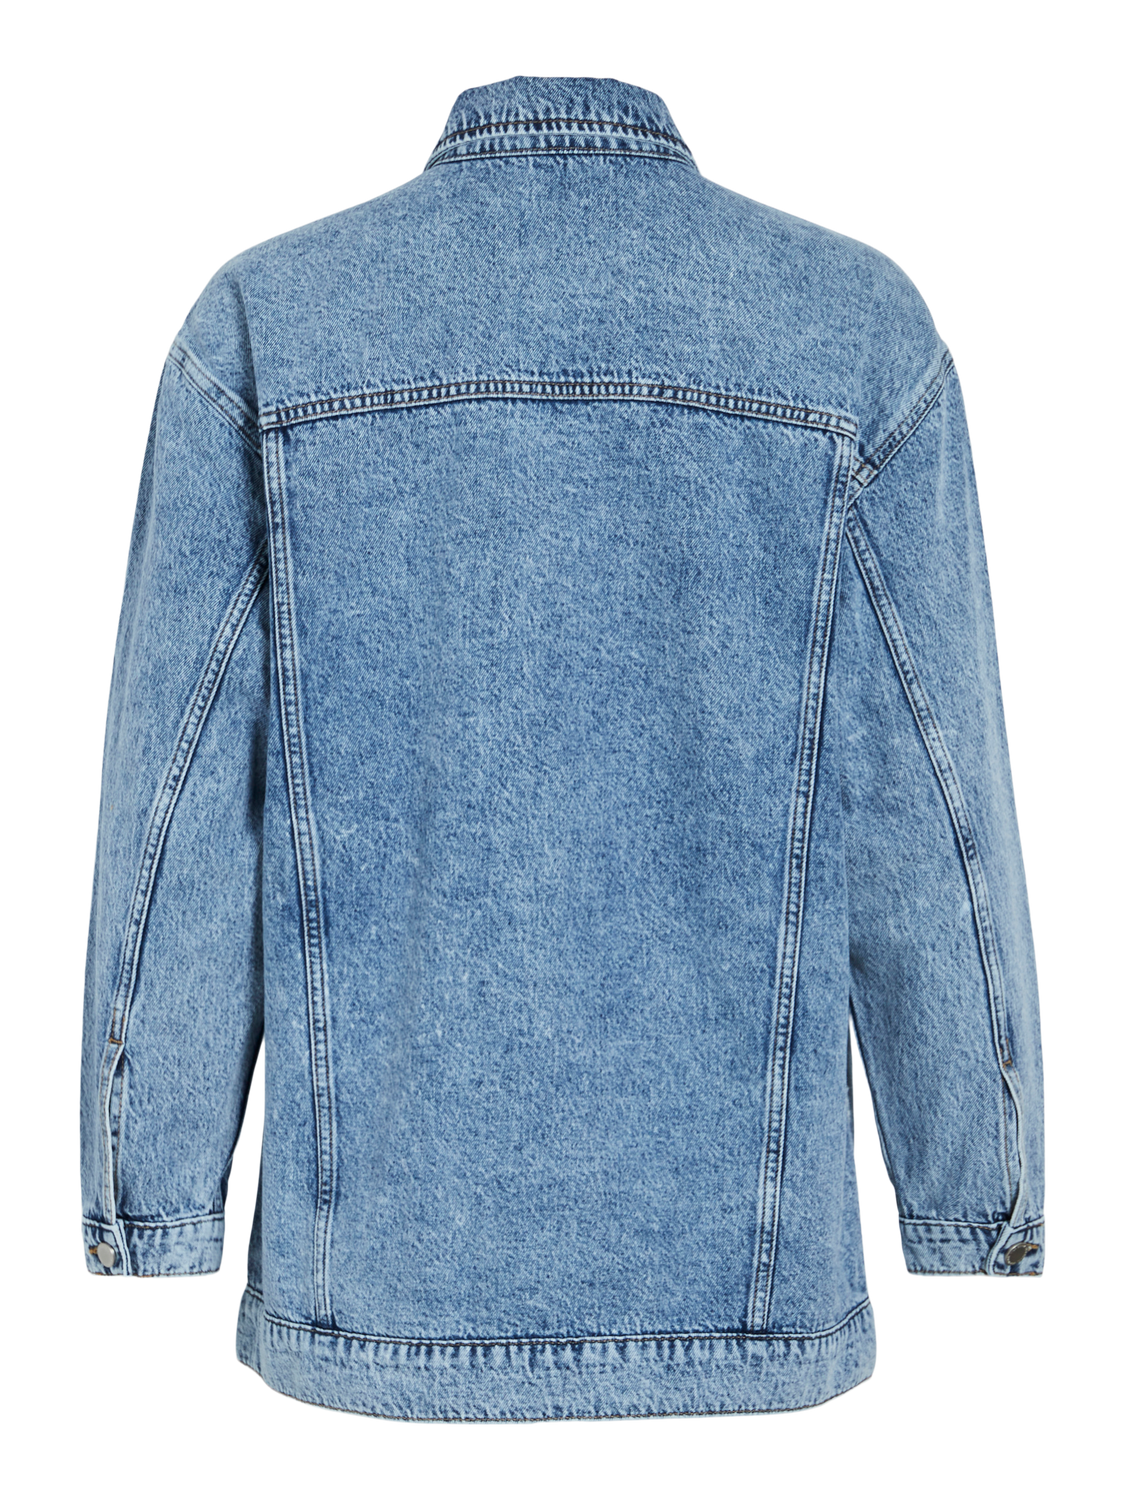 VICELESTIAL Jacket - Medium Blue Denim